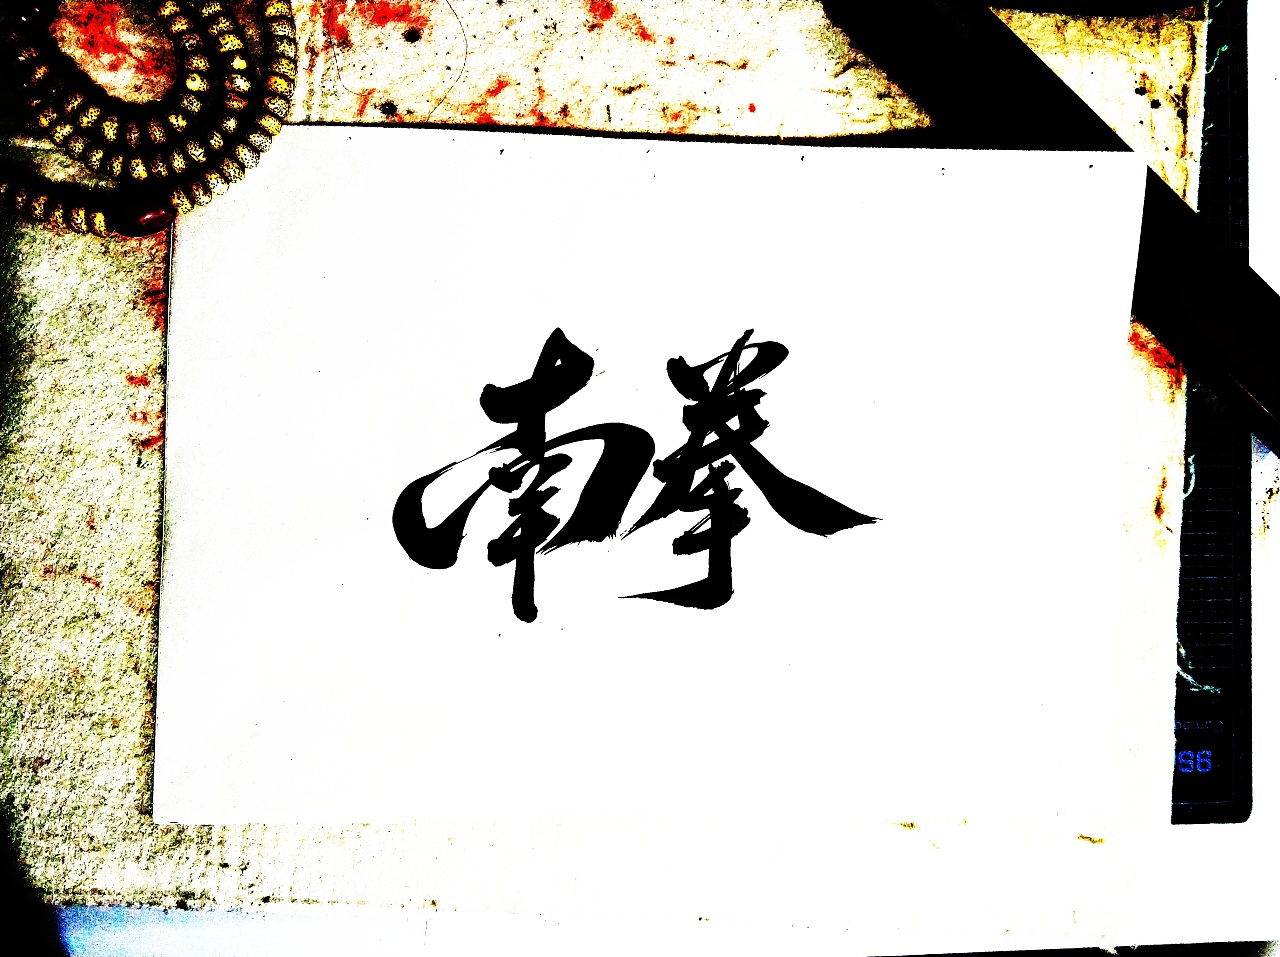 chinese font style uwp